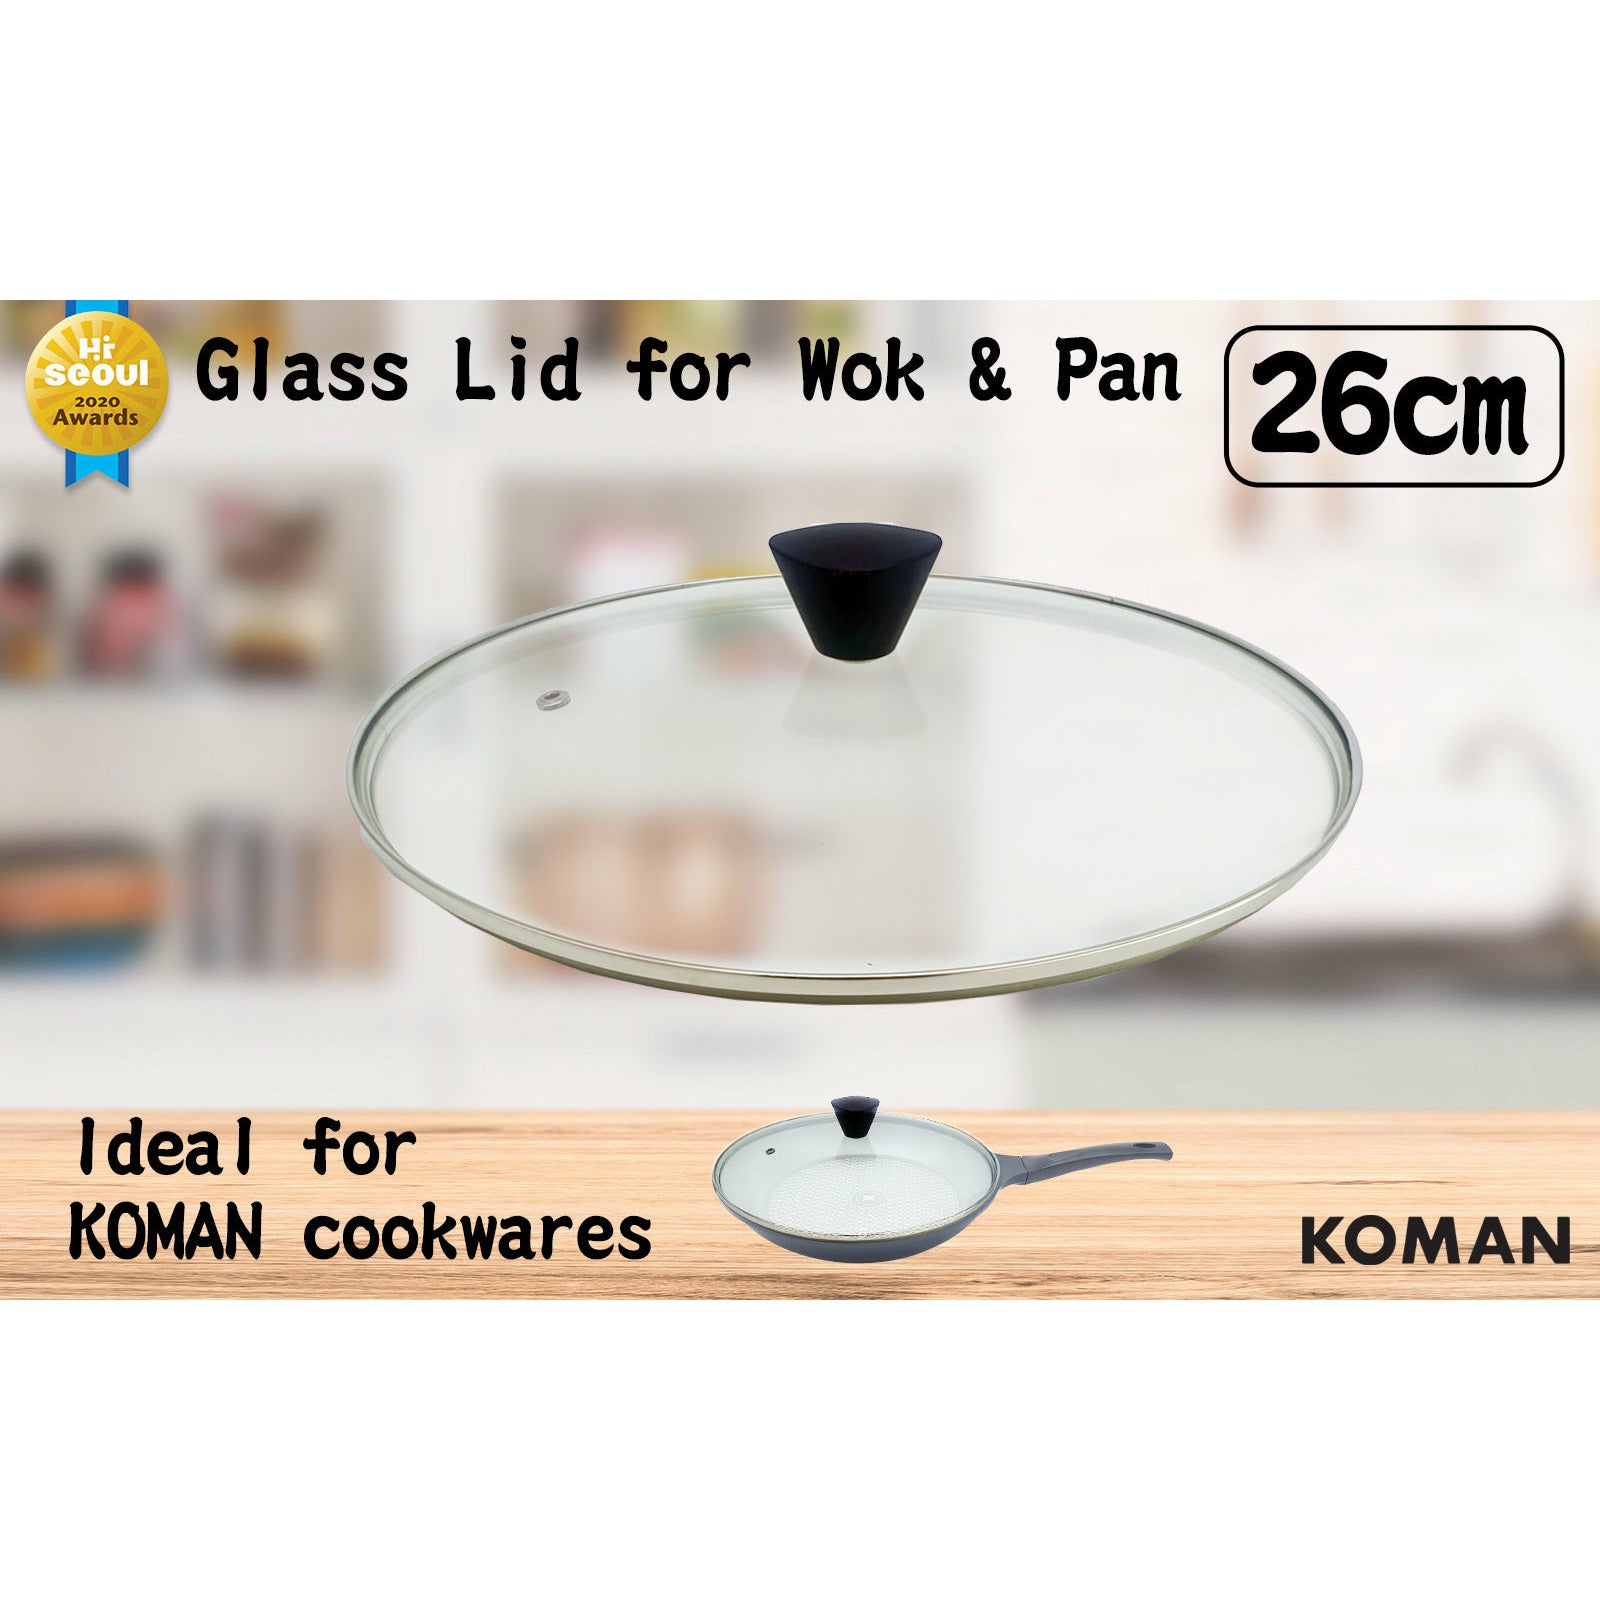 KOMAN 26cm Stainless Steel Glass Lid with Bakelite Handle